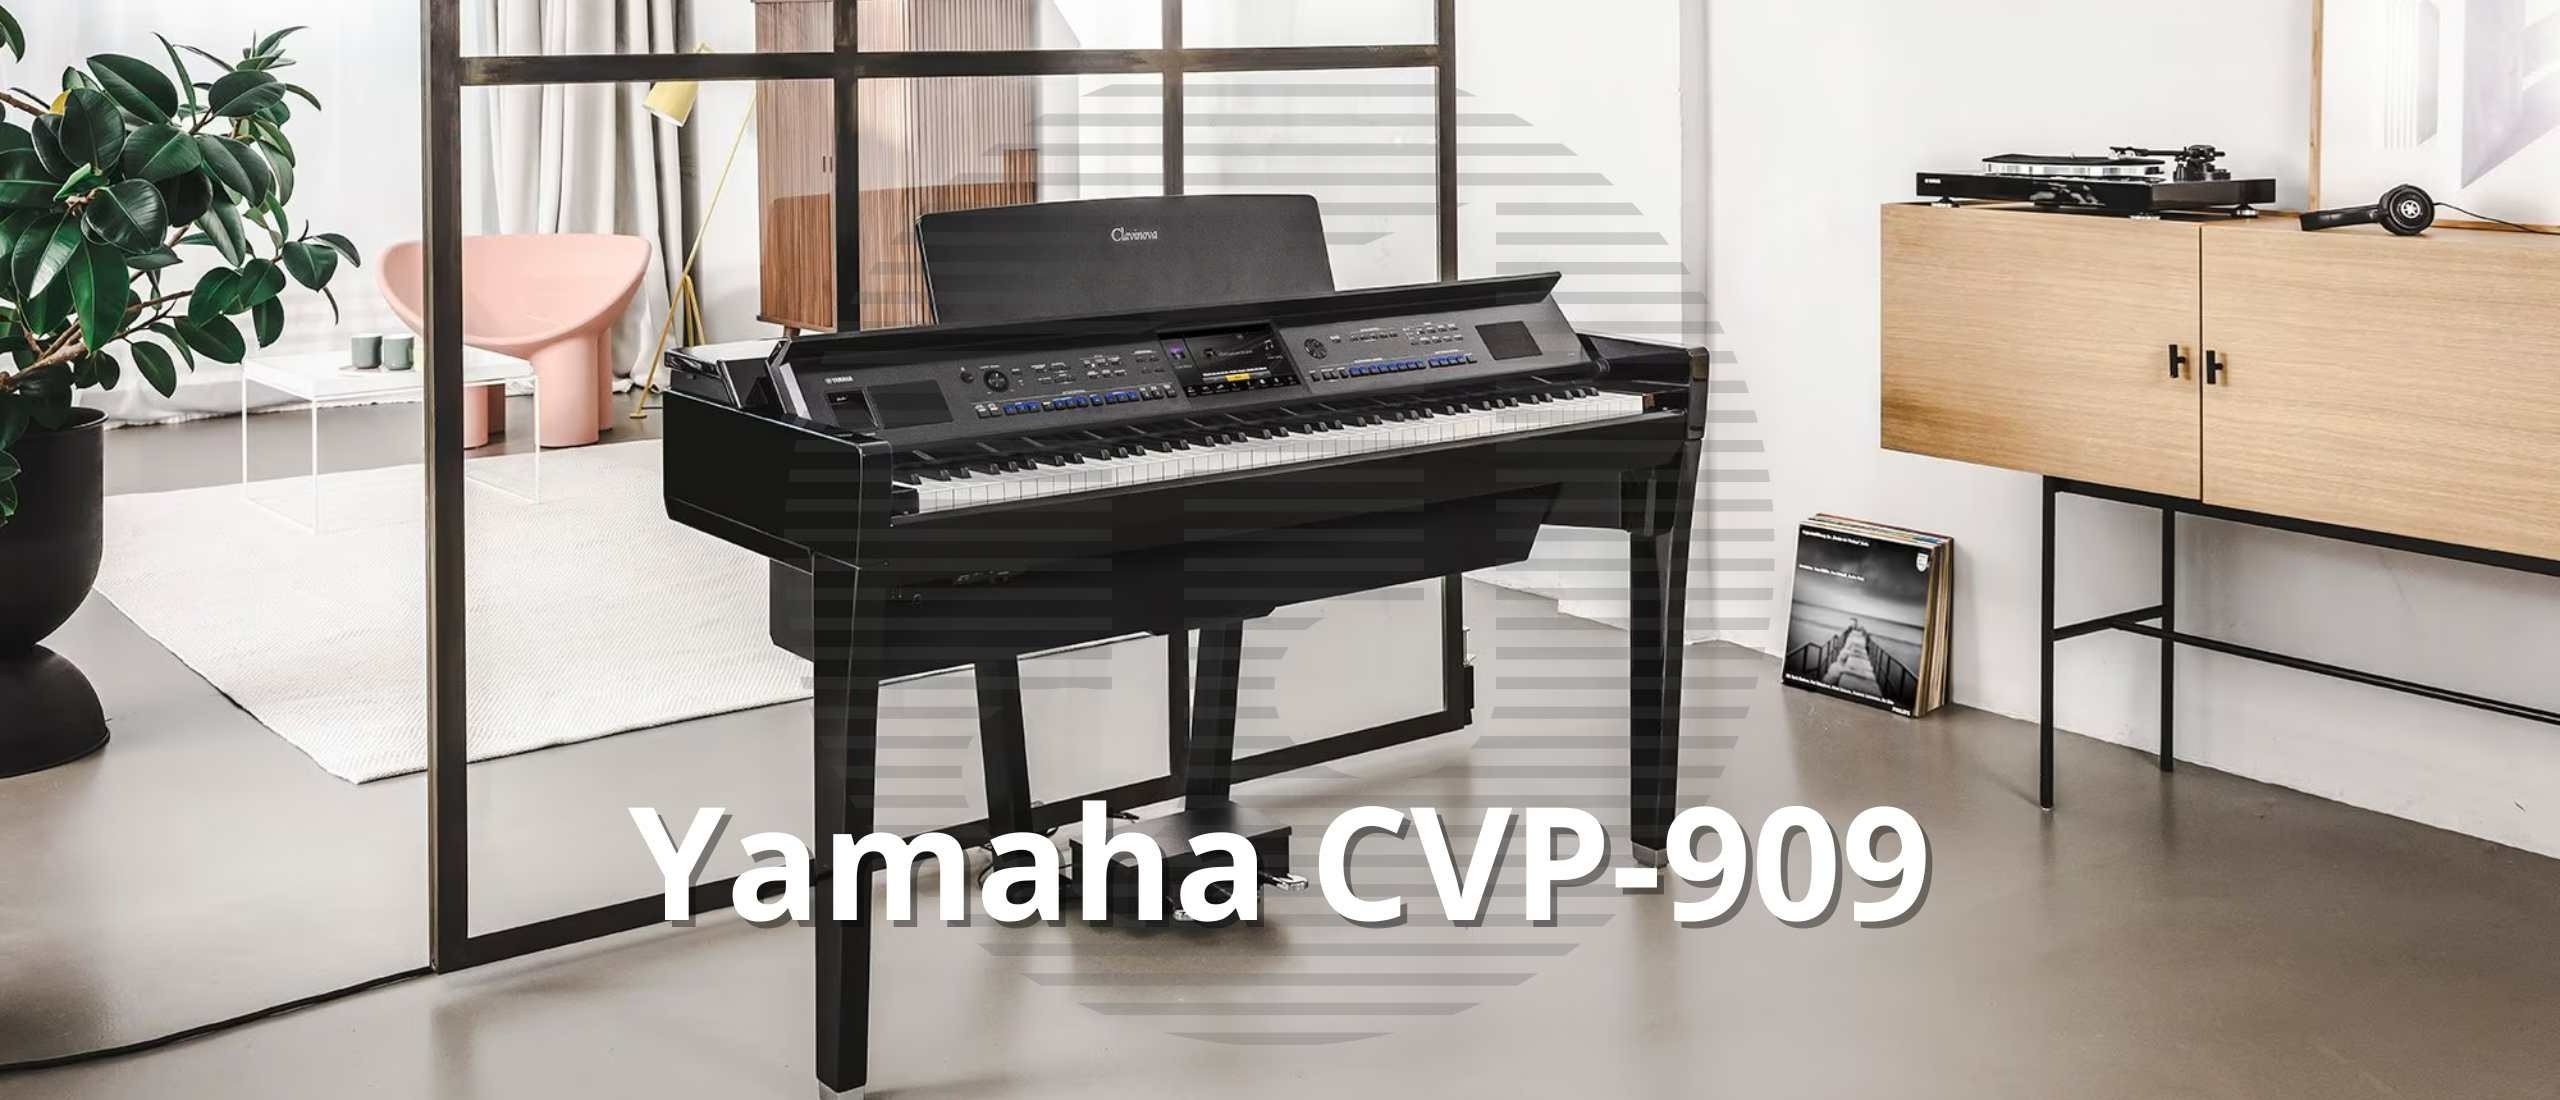 Introductie van de Yamaha CVP-909 Clavinova Digitale Piano